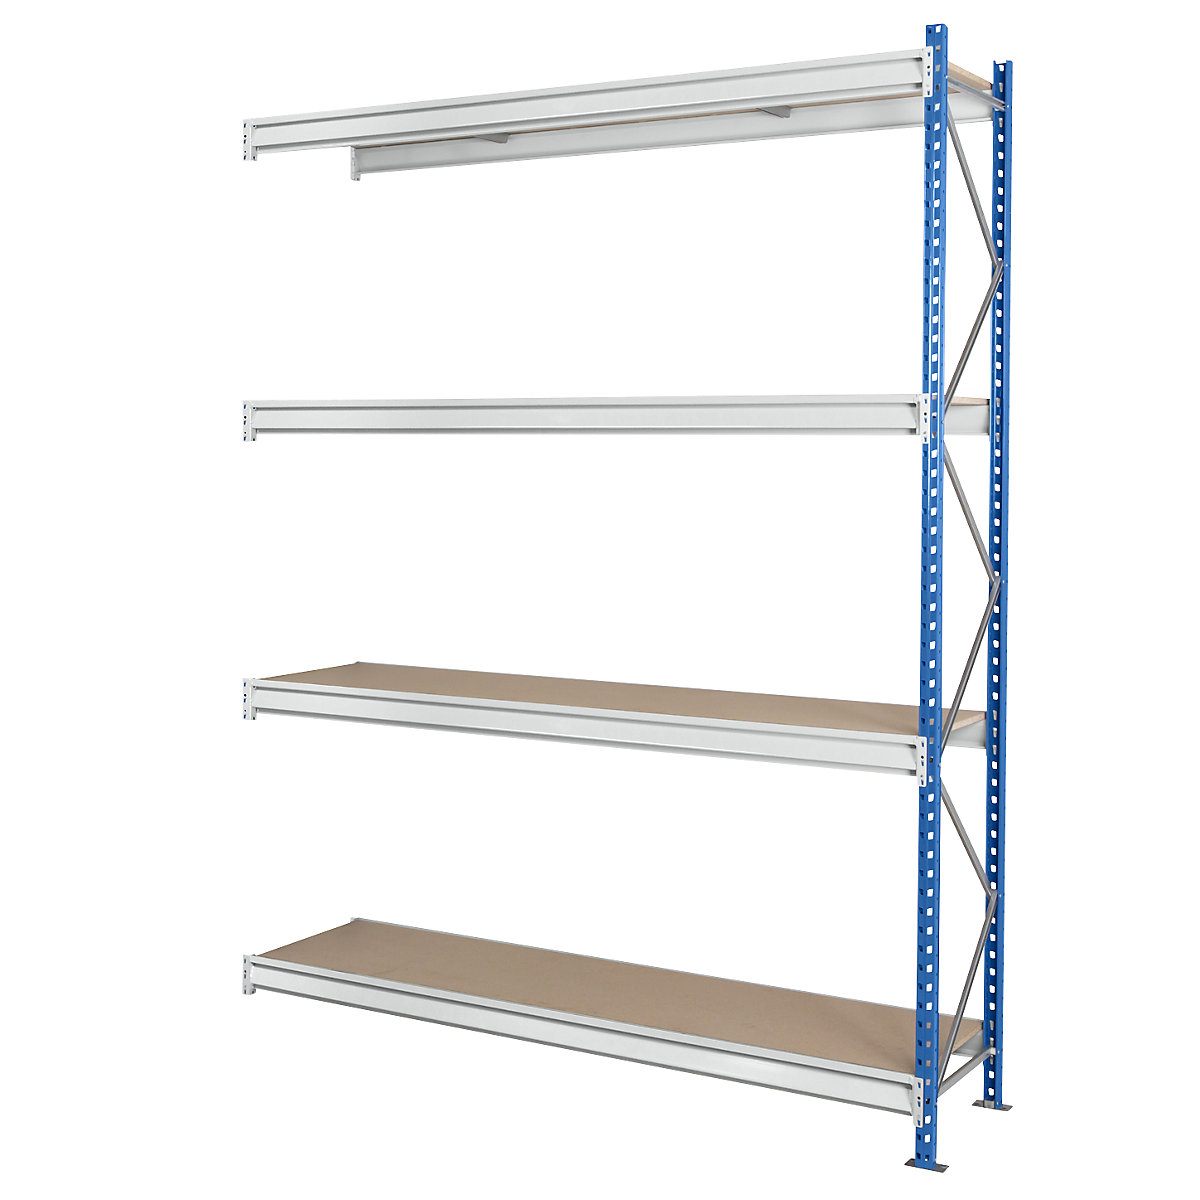 Heavy duty wide span shelving with moulded chipboard shelf panels, frame colour blue, HxWxD 2996 x 2330 x 1000 mm, extension shelf unit-7